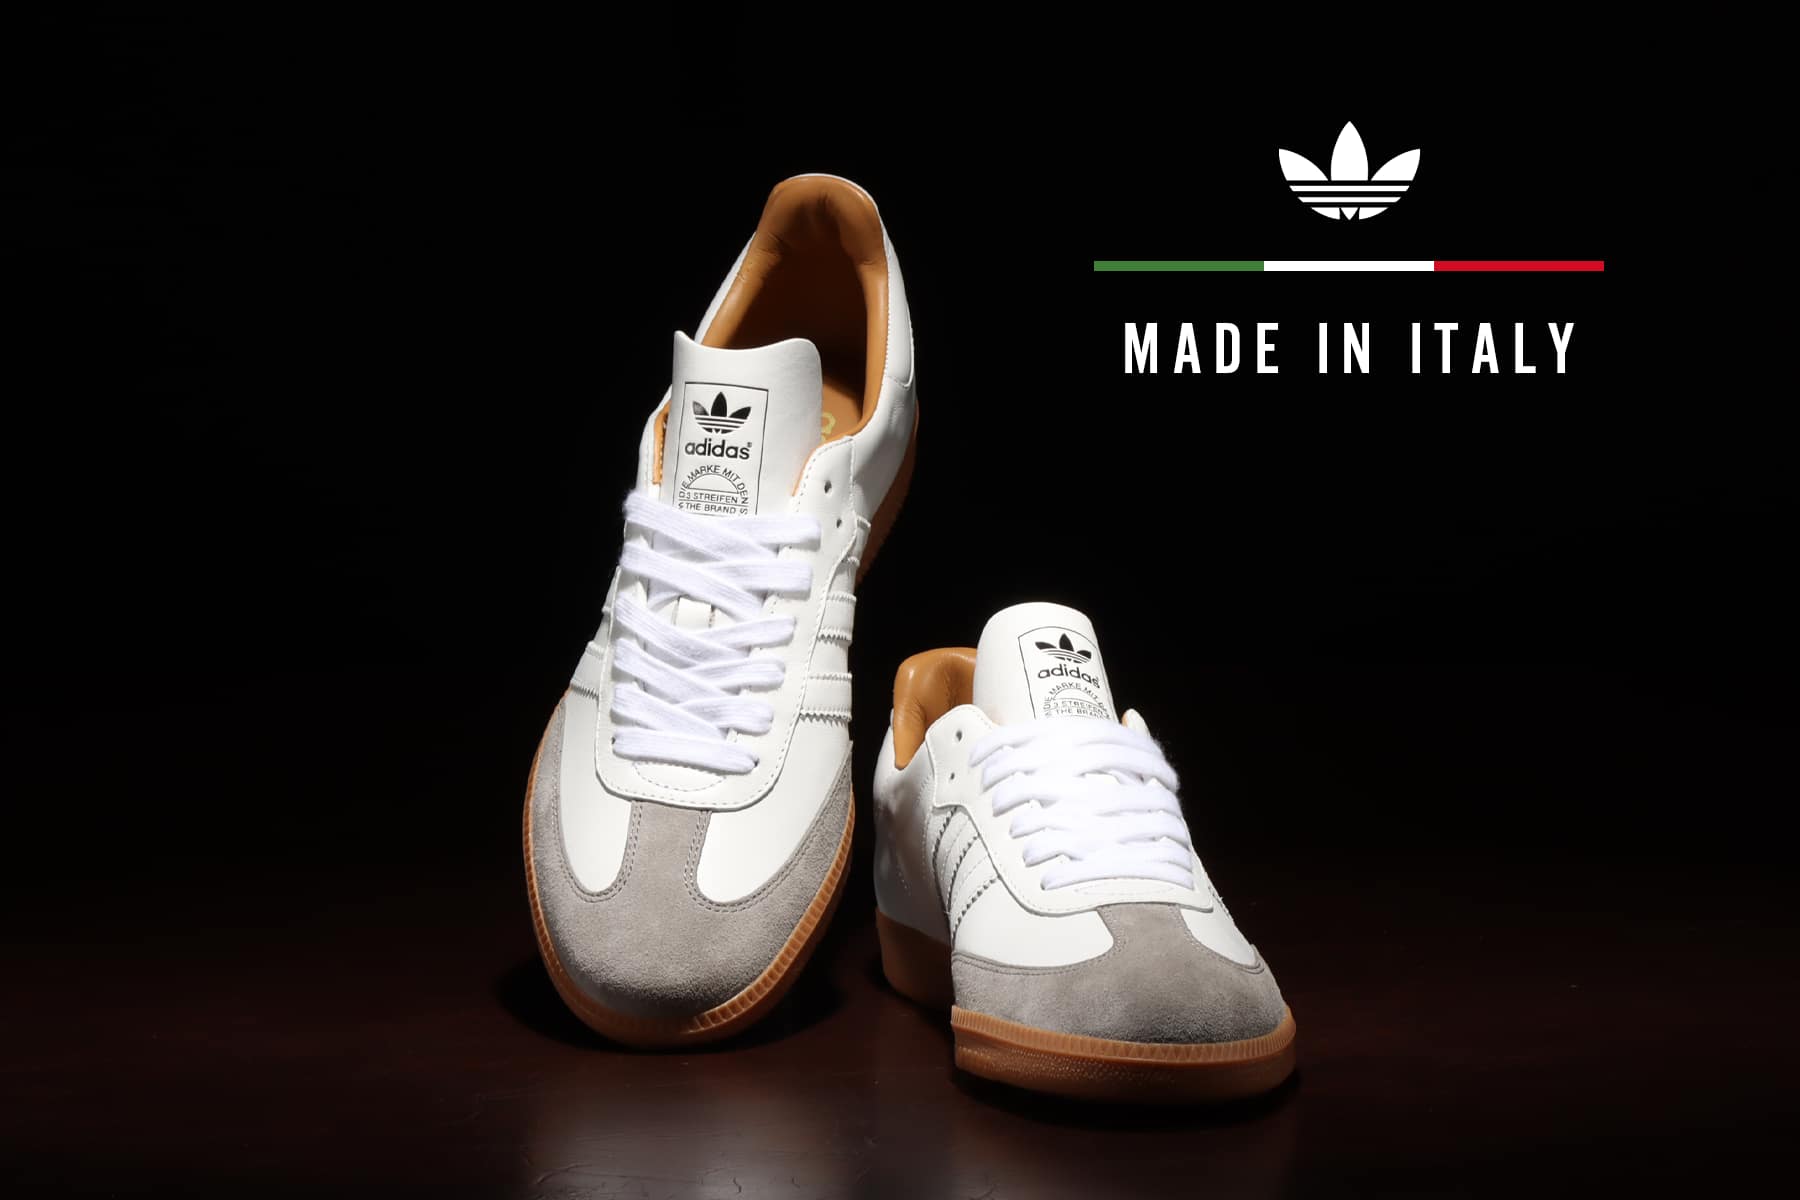 adidas Originals SAMBA OG MADE IN ITALY